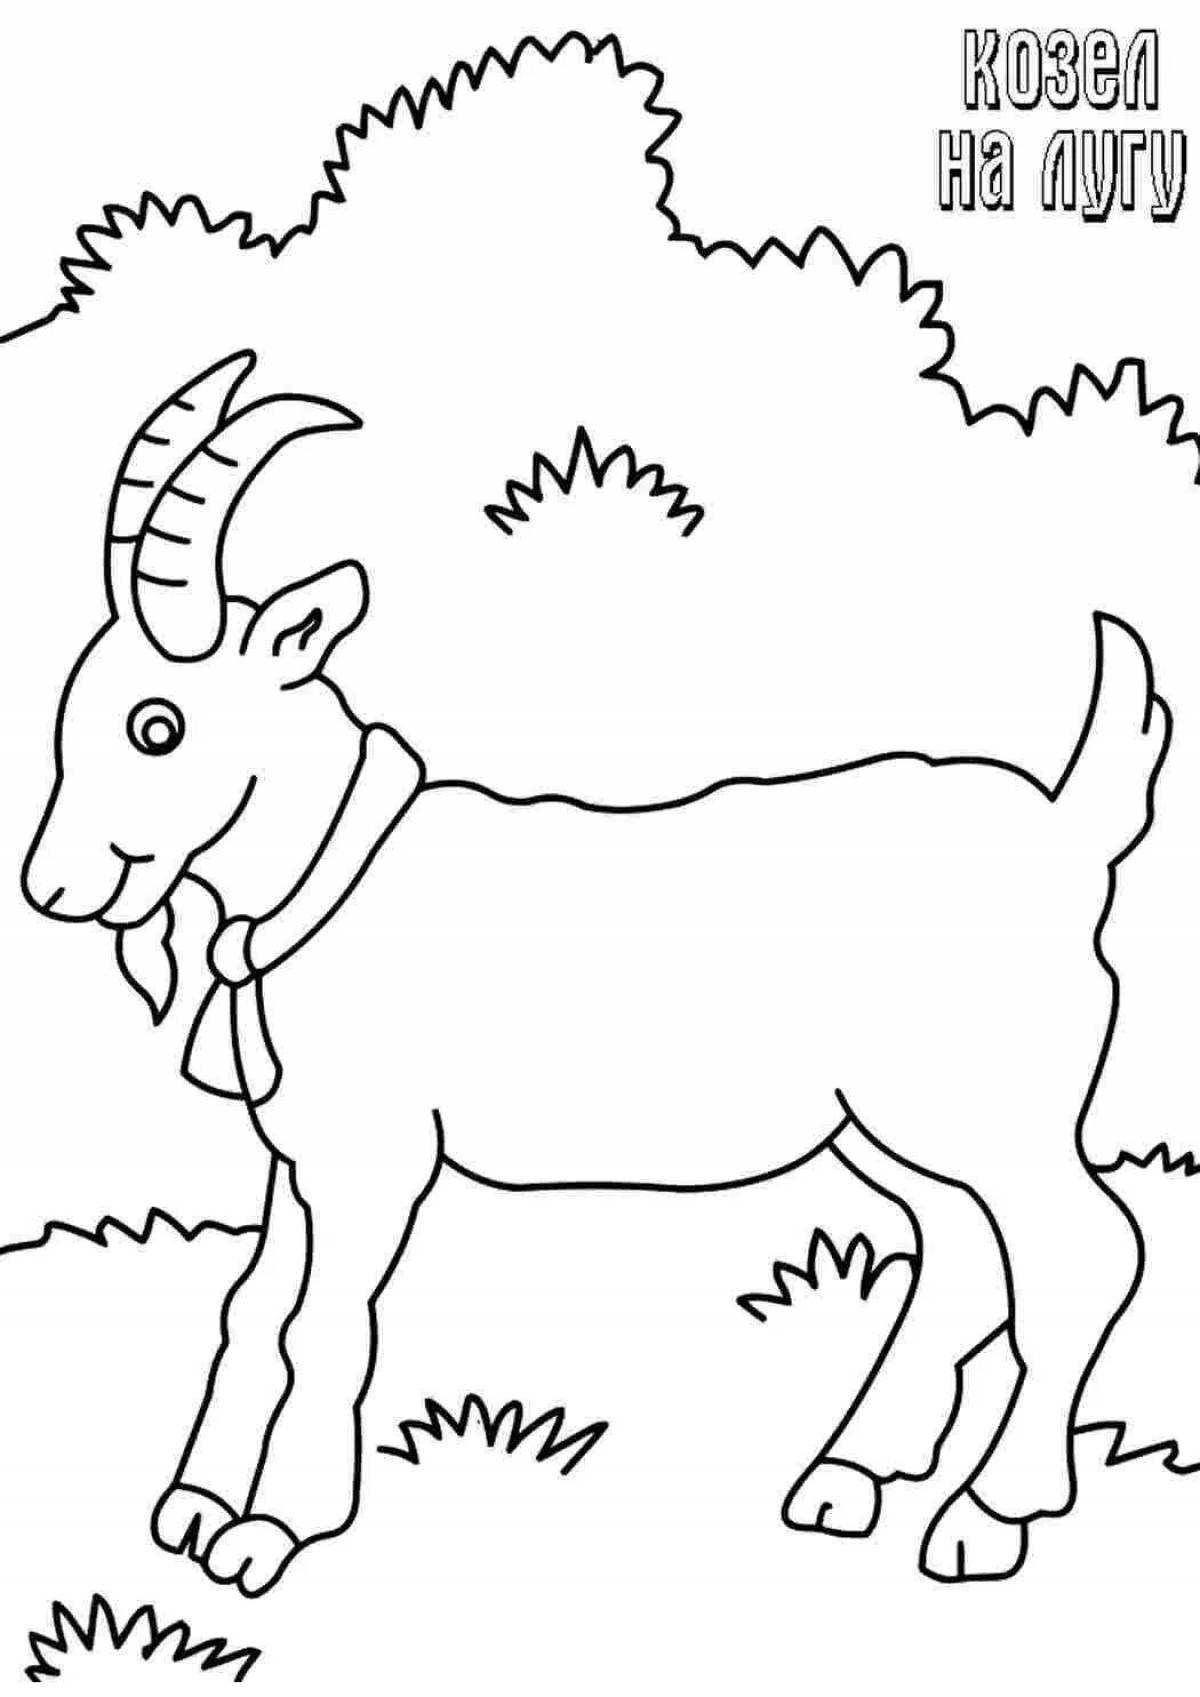 Joyful goat coloring book for kids